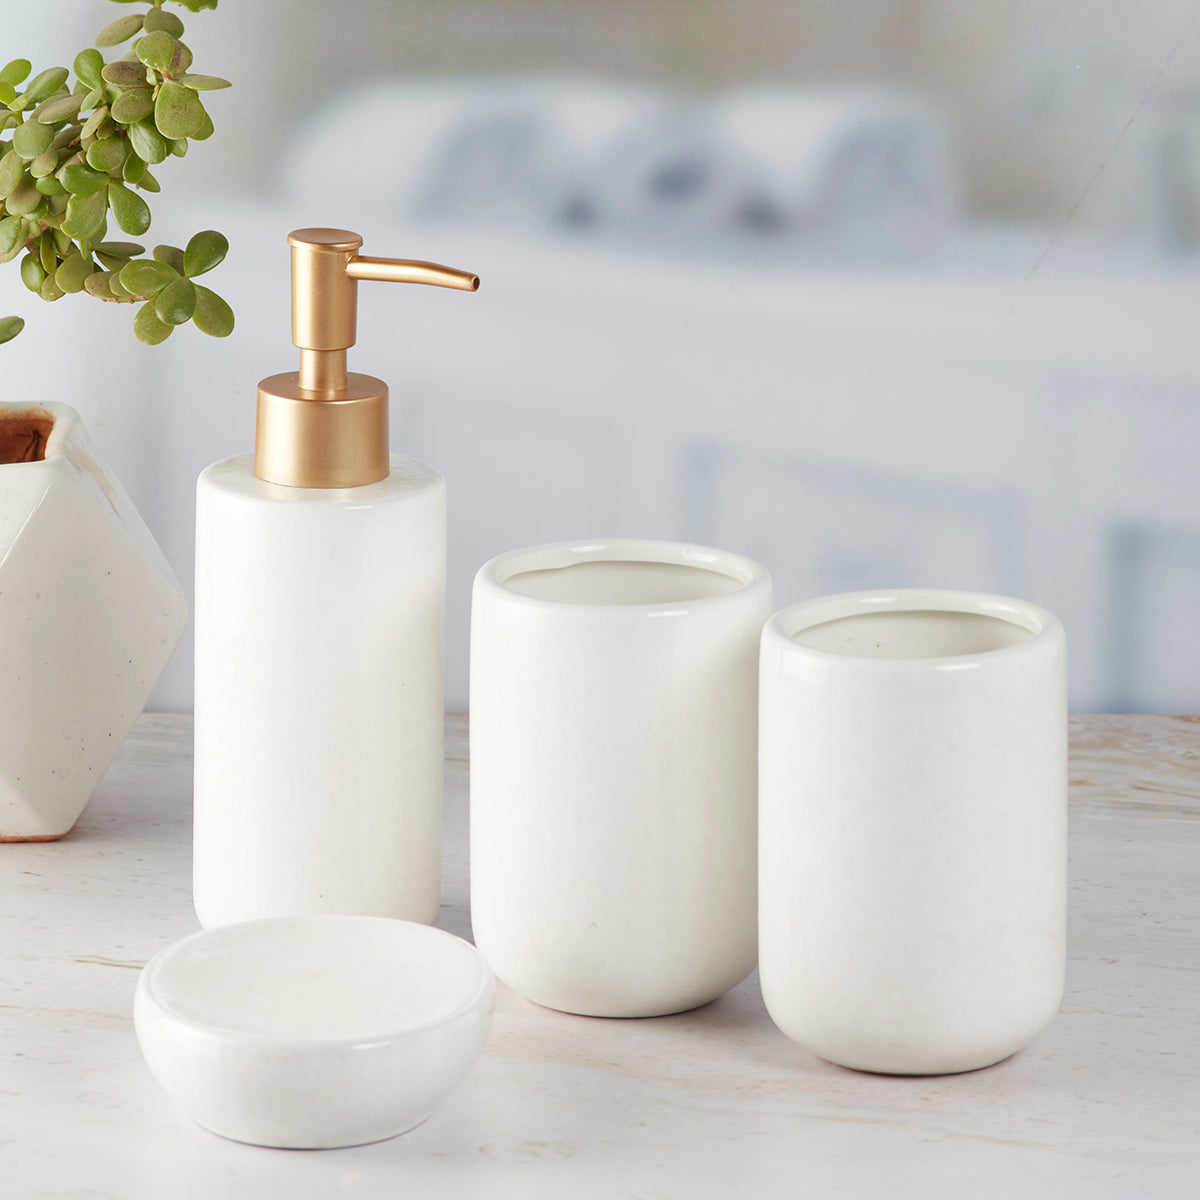 Ceramic Bathroom Accessories Set of 4 Bath Set with Soap Dispenser (10053)